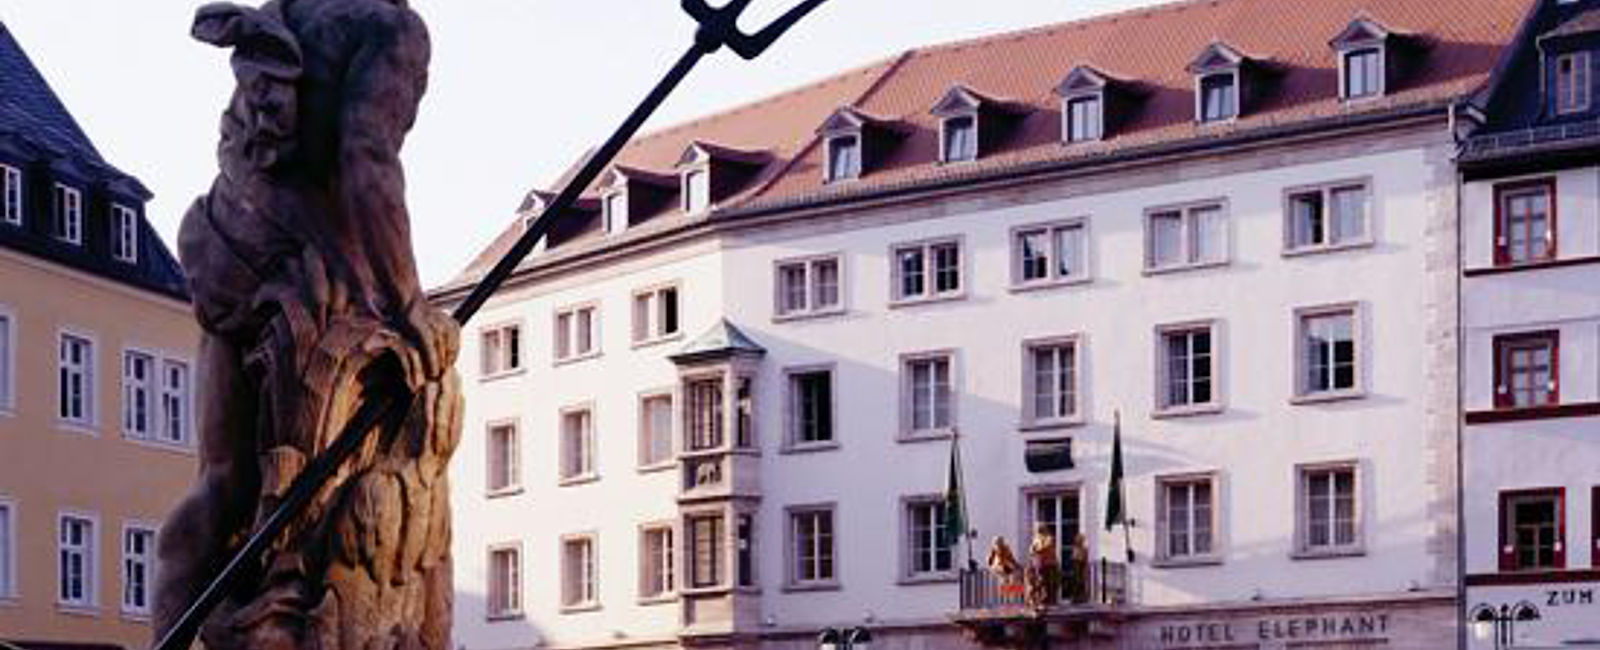 HOTEL TIPPS
 Hotel Elephant, a Luxury Collection Hotel, Weimar 
 Exklusives Gourmet Hotel in großartiger Lage 